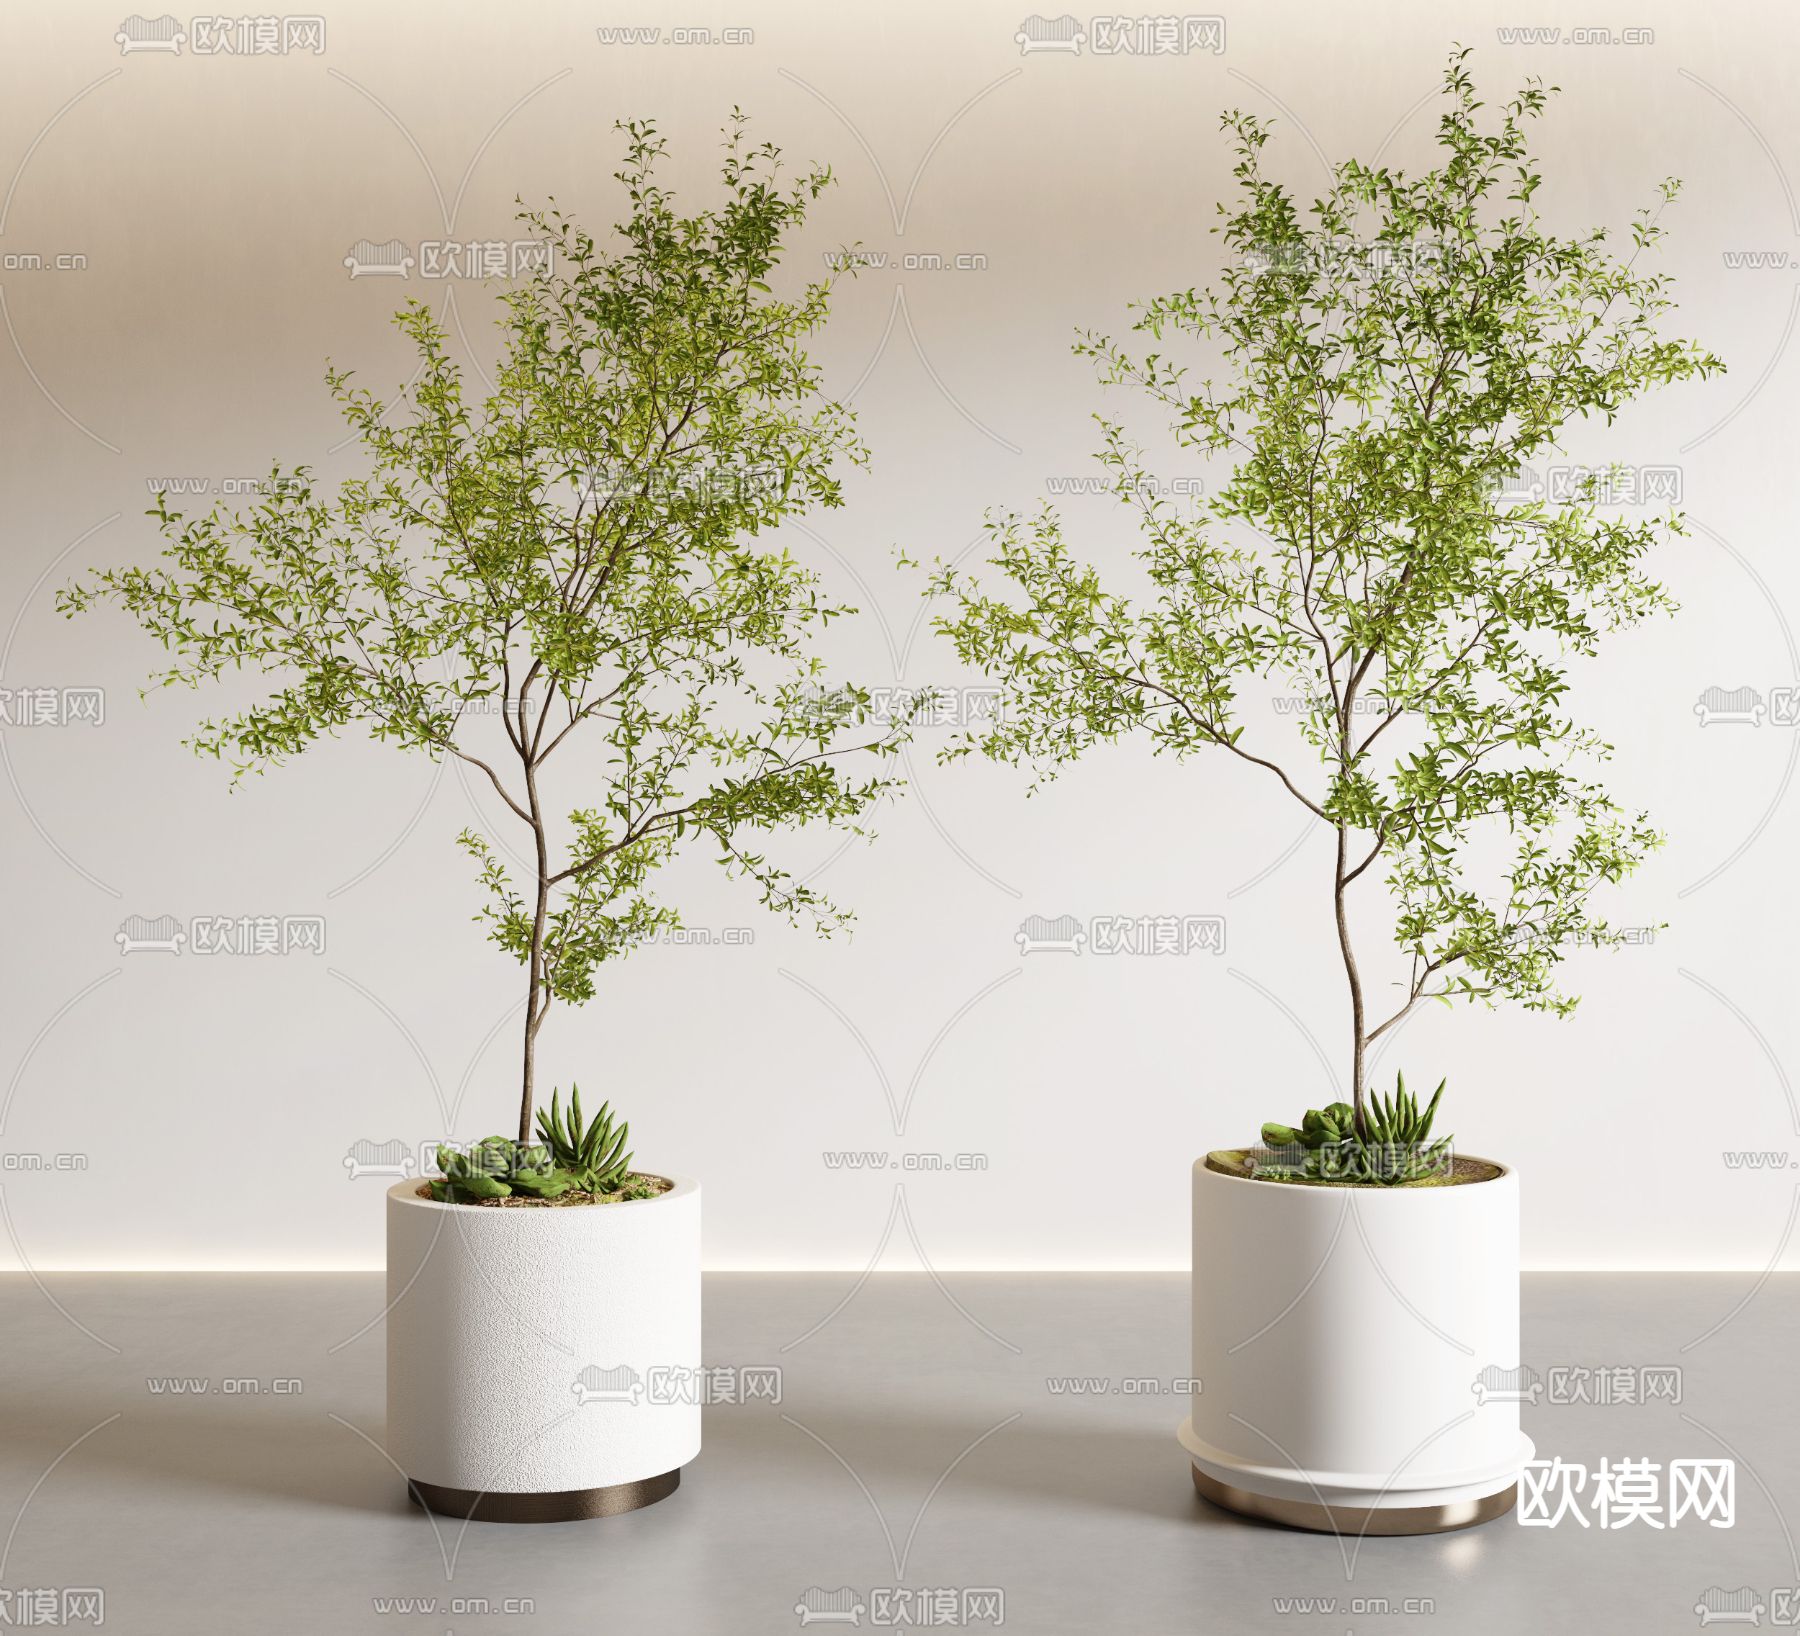 Plant – VRAY / CORONA – 3D MODEL – 442 - thumbnail 1